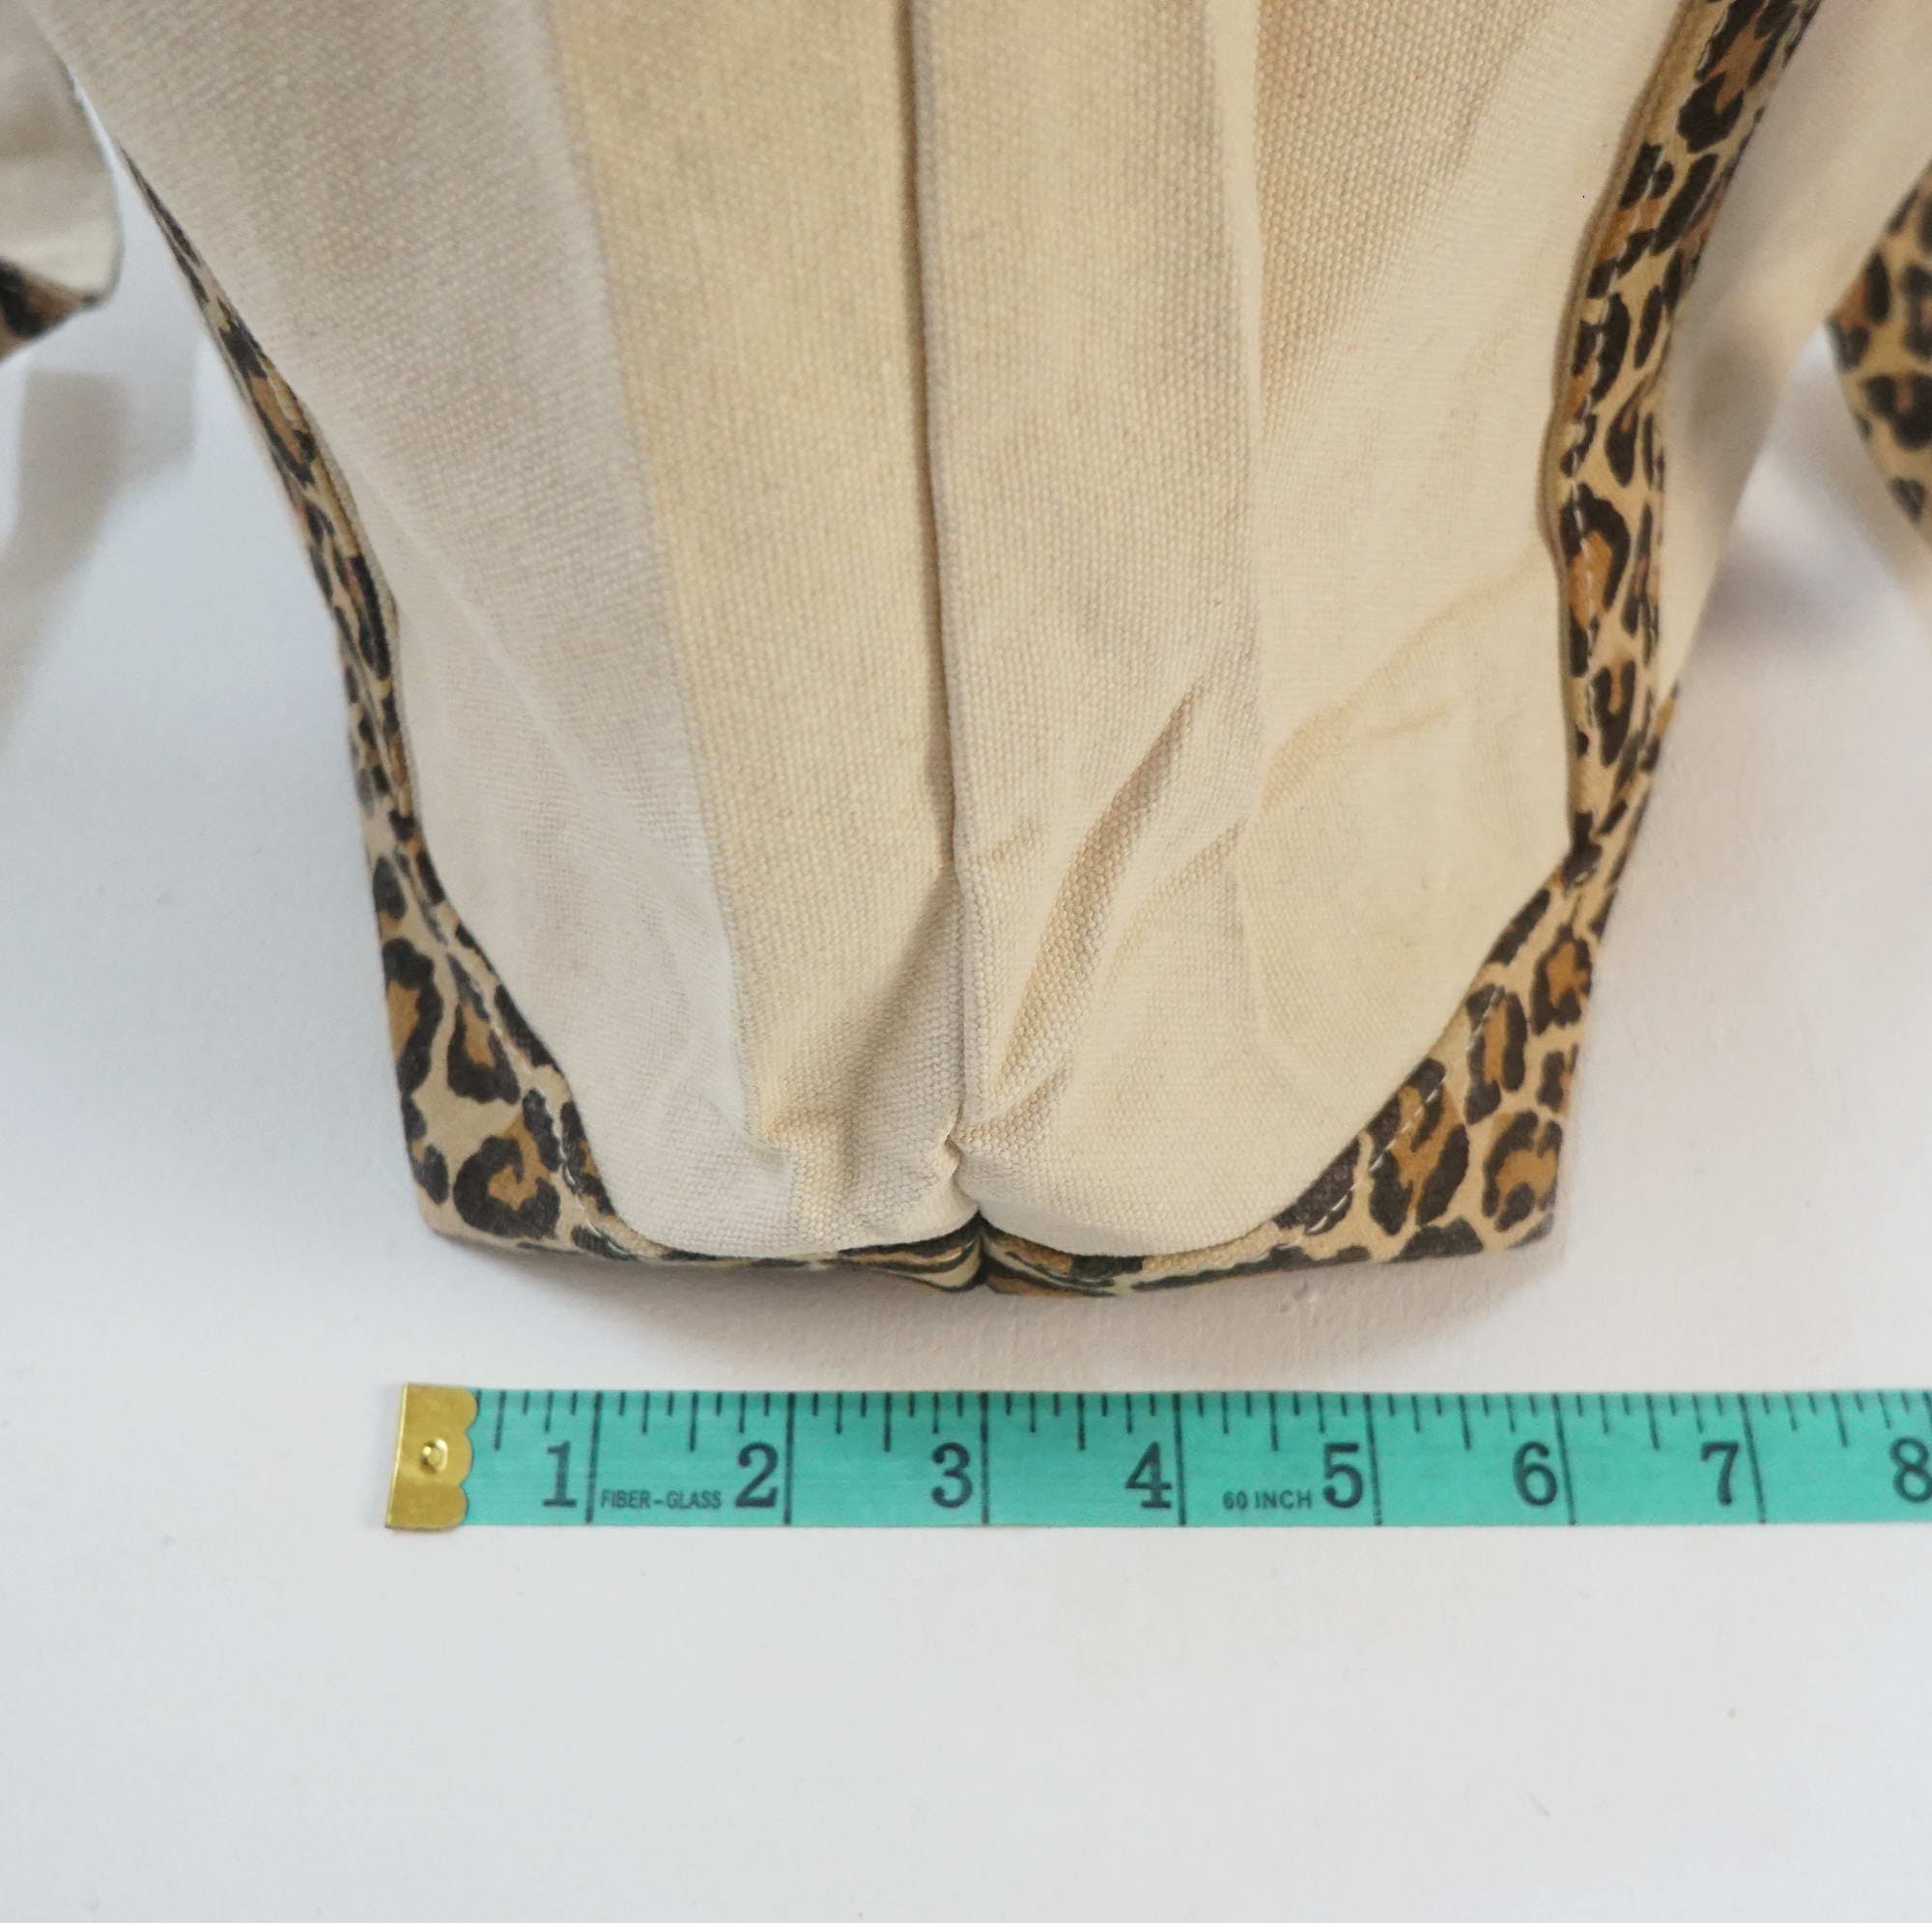 UNITED ARROWS Leopard Printed Tote Bag - 10